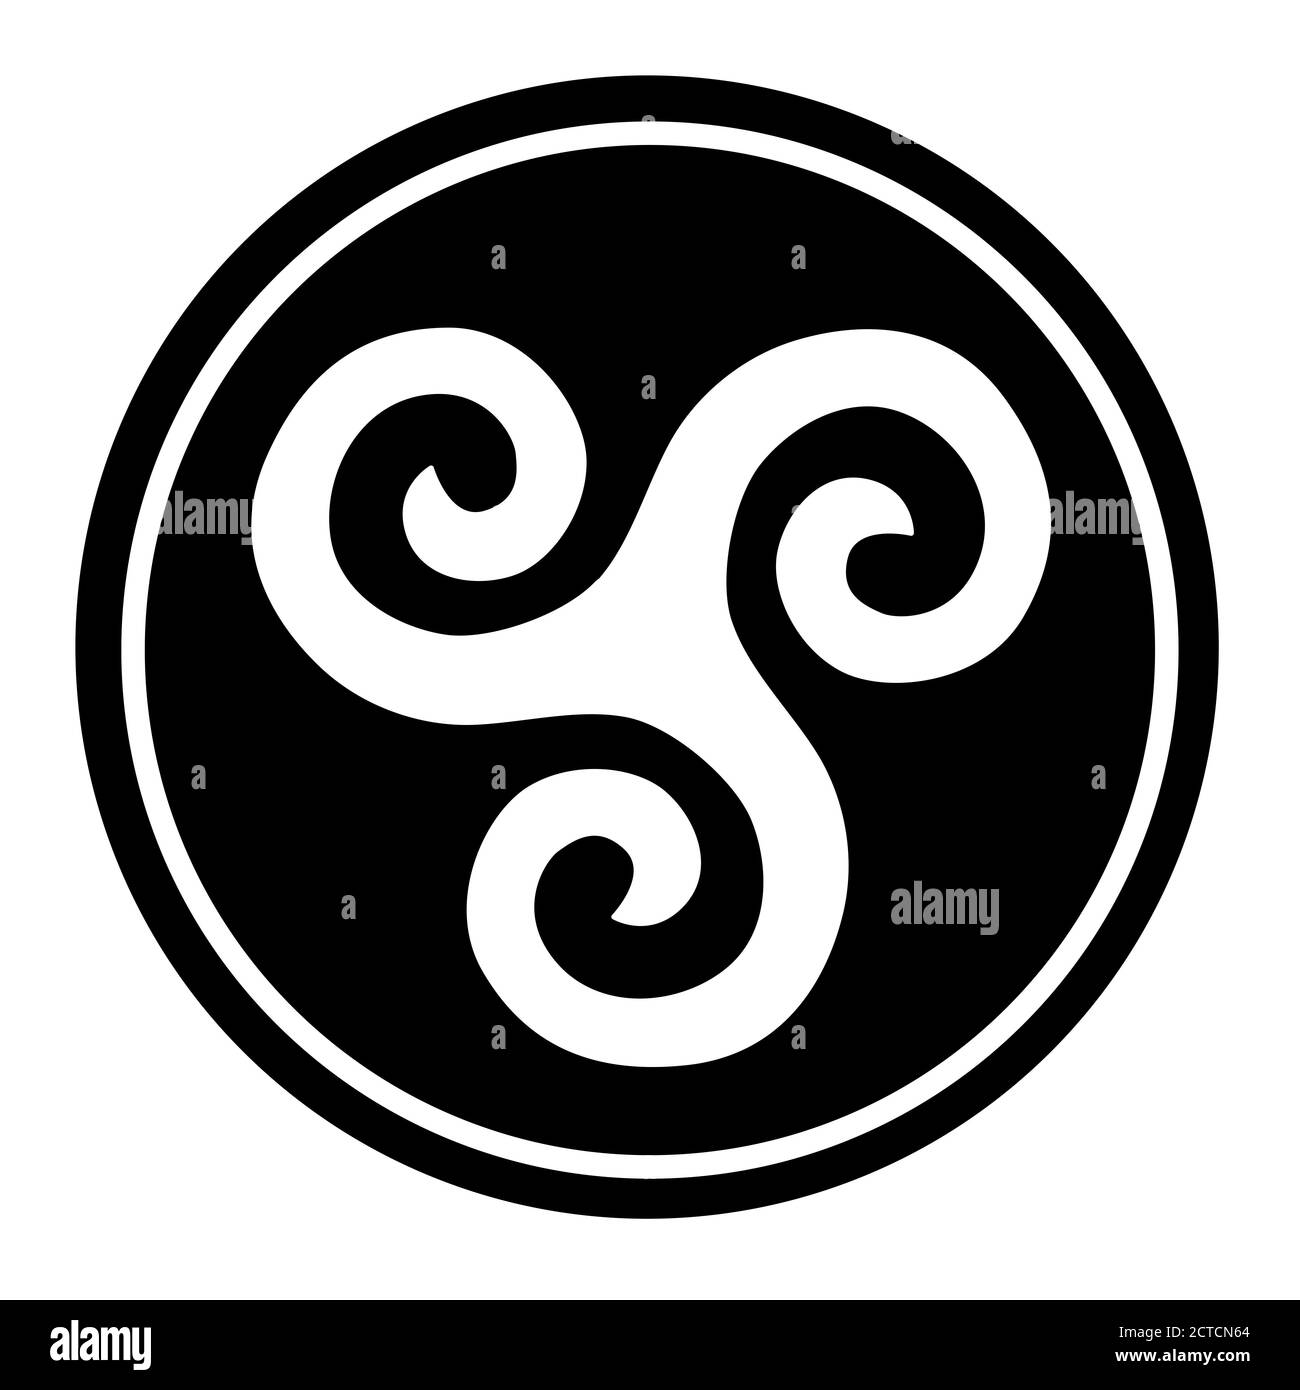 Triskelion symbol icon in a black circle Stock Photo